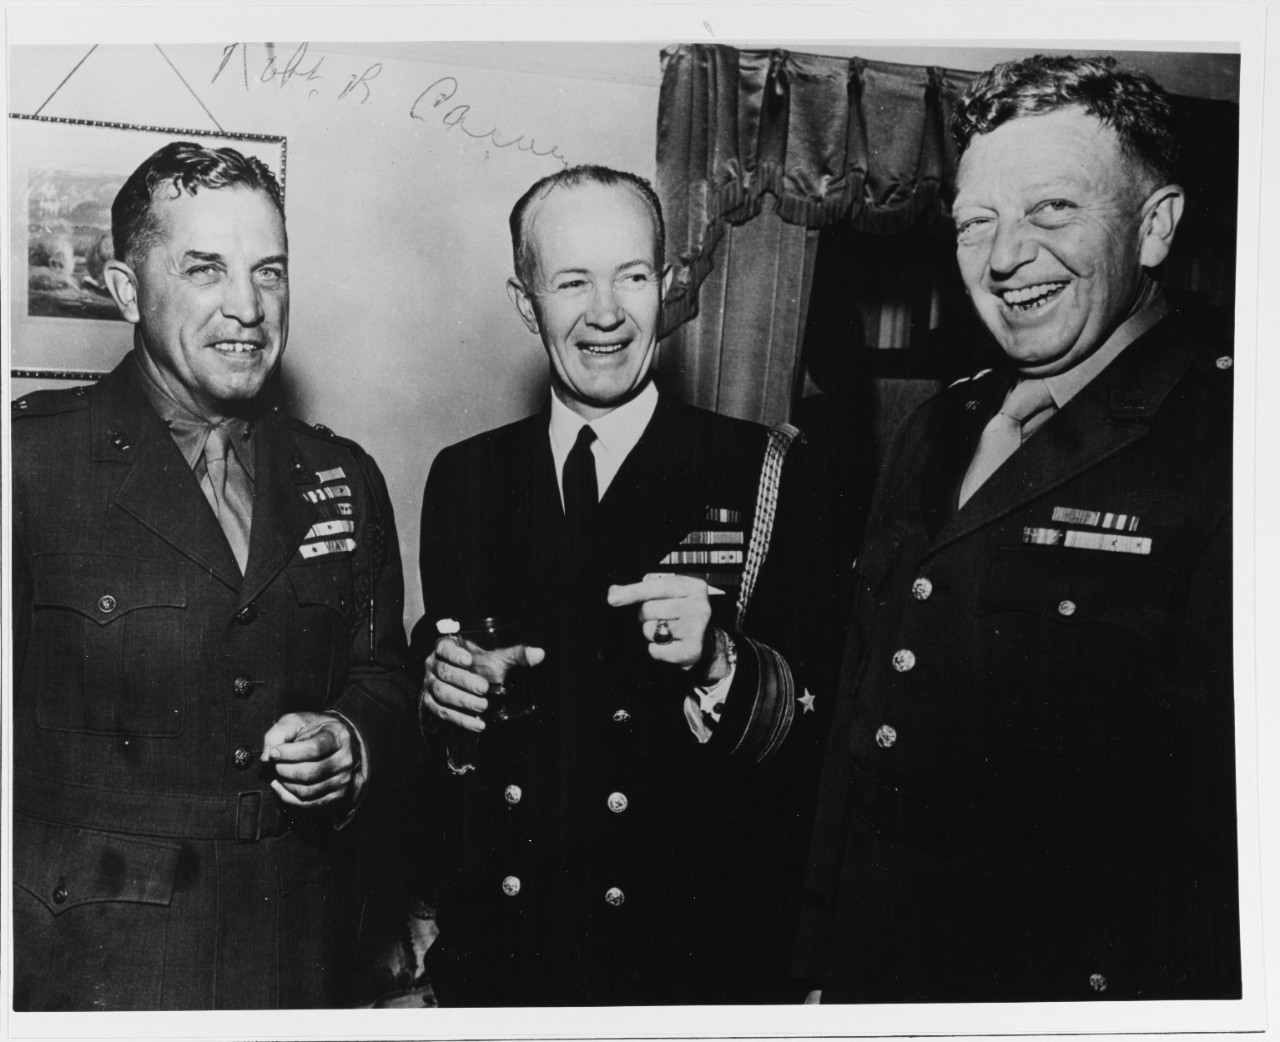 BGen. Bill Riley, USMC, RAdm. R.B. Carney USN, & MGen. L.F. Wing, CG, 43rd Div.